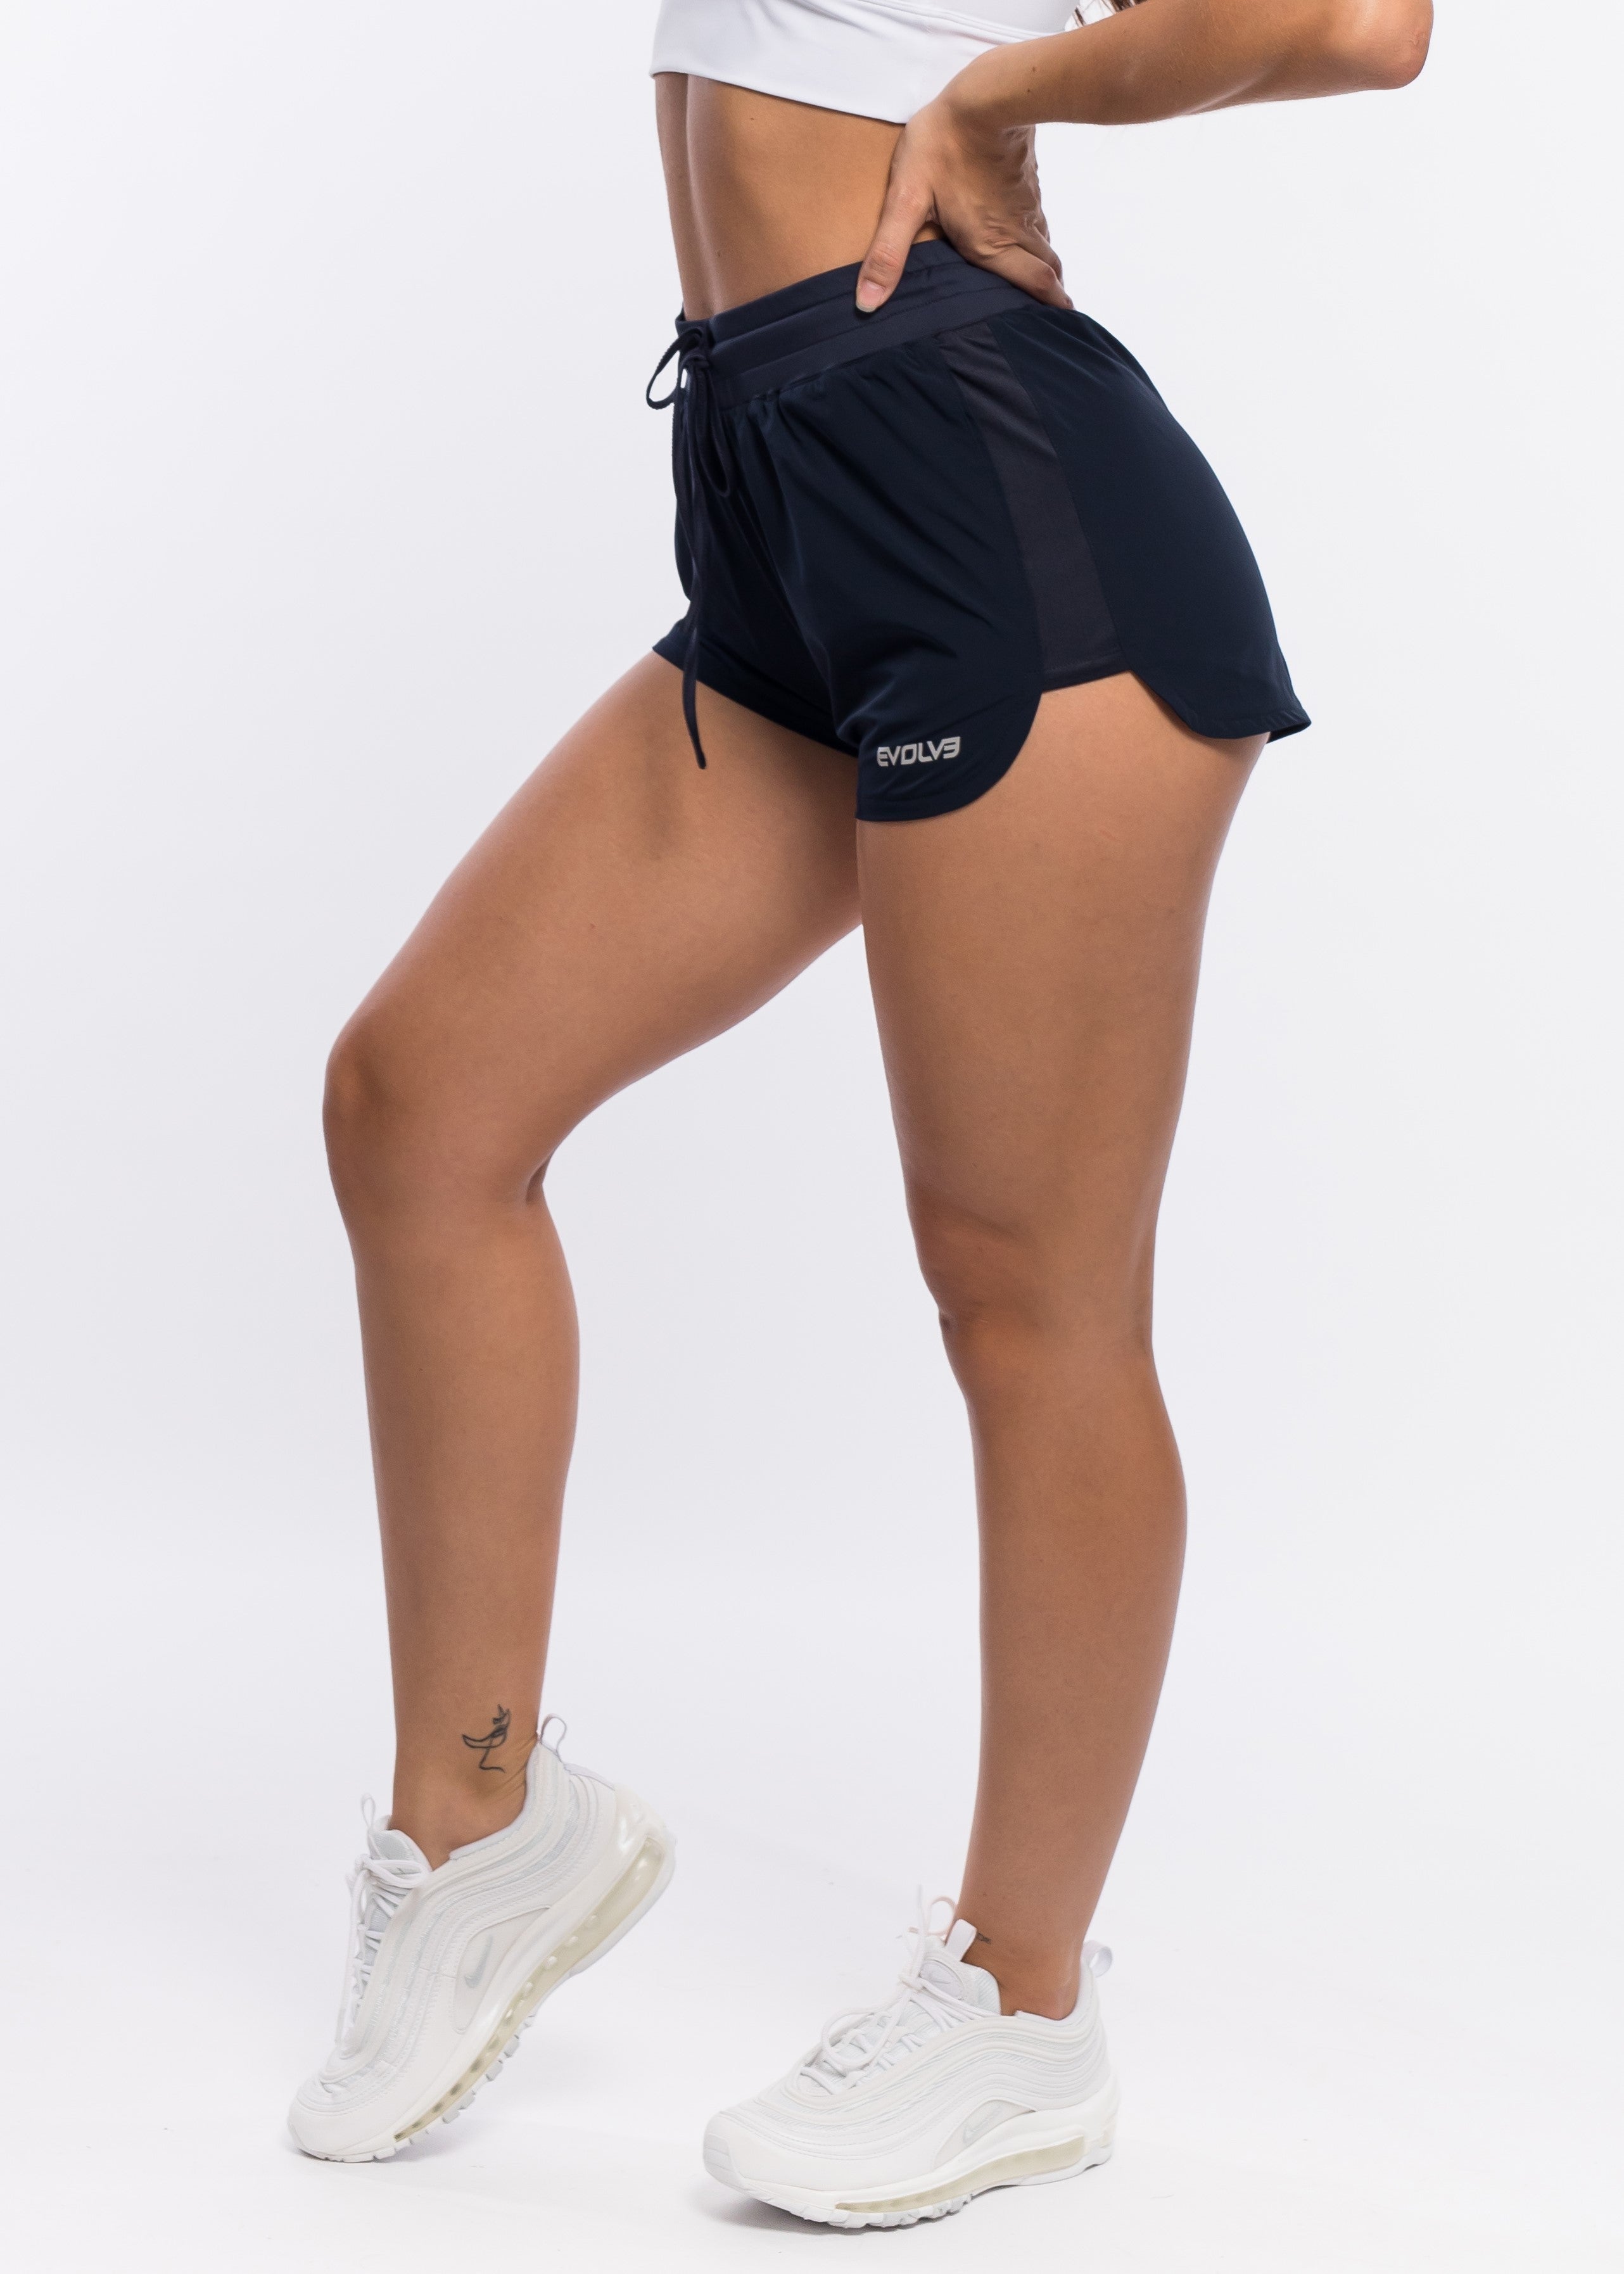 Evolve Apparel Athletic Shorts - Navy